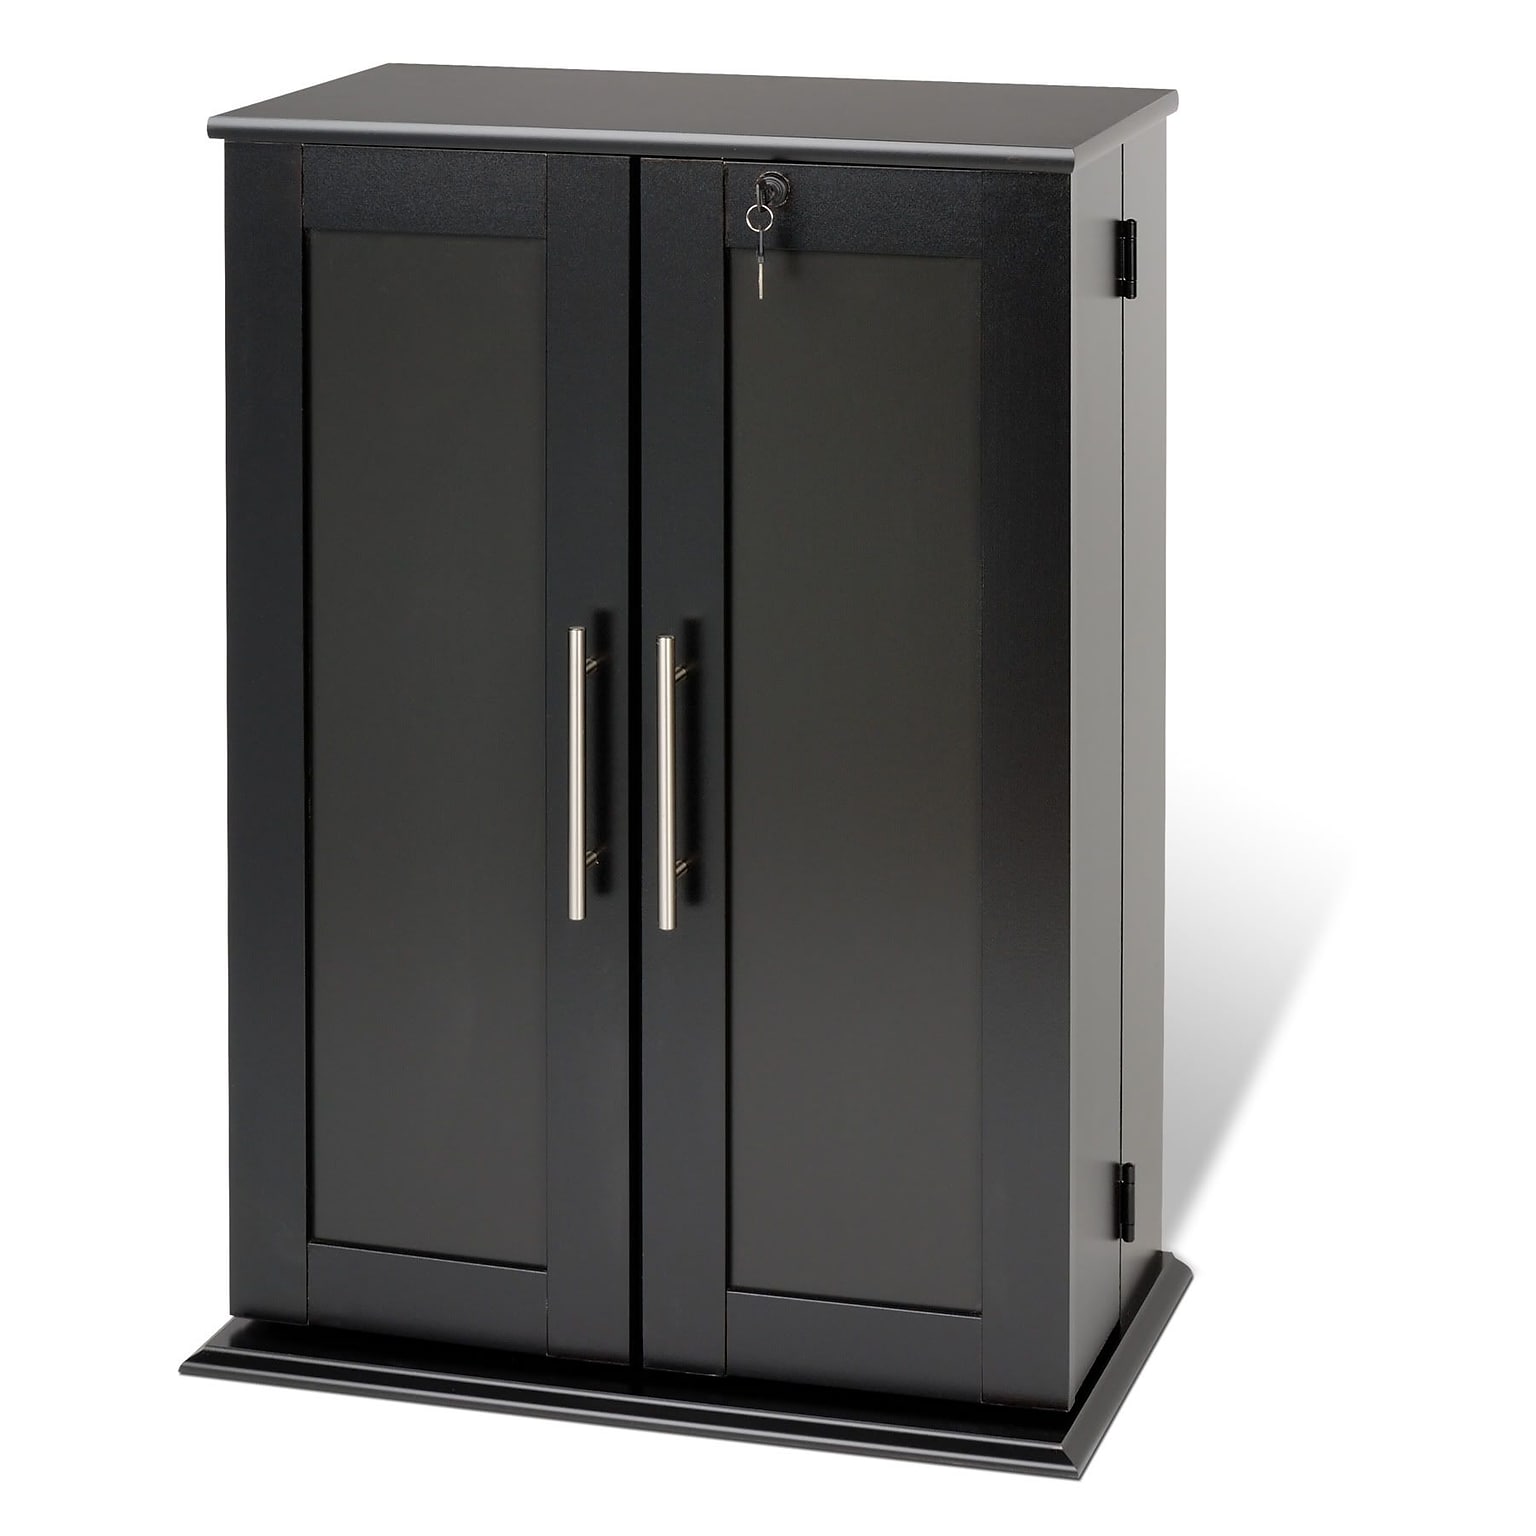 Prepac™ Locking Media Storage Cabinet With Shaker Doors, Black